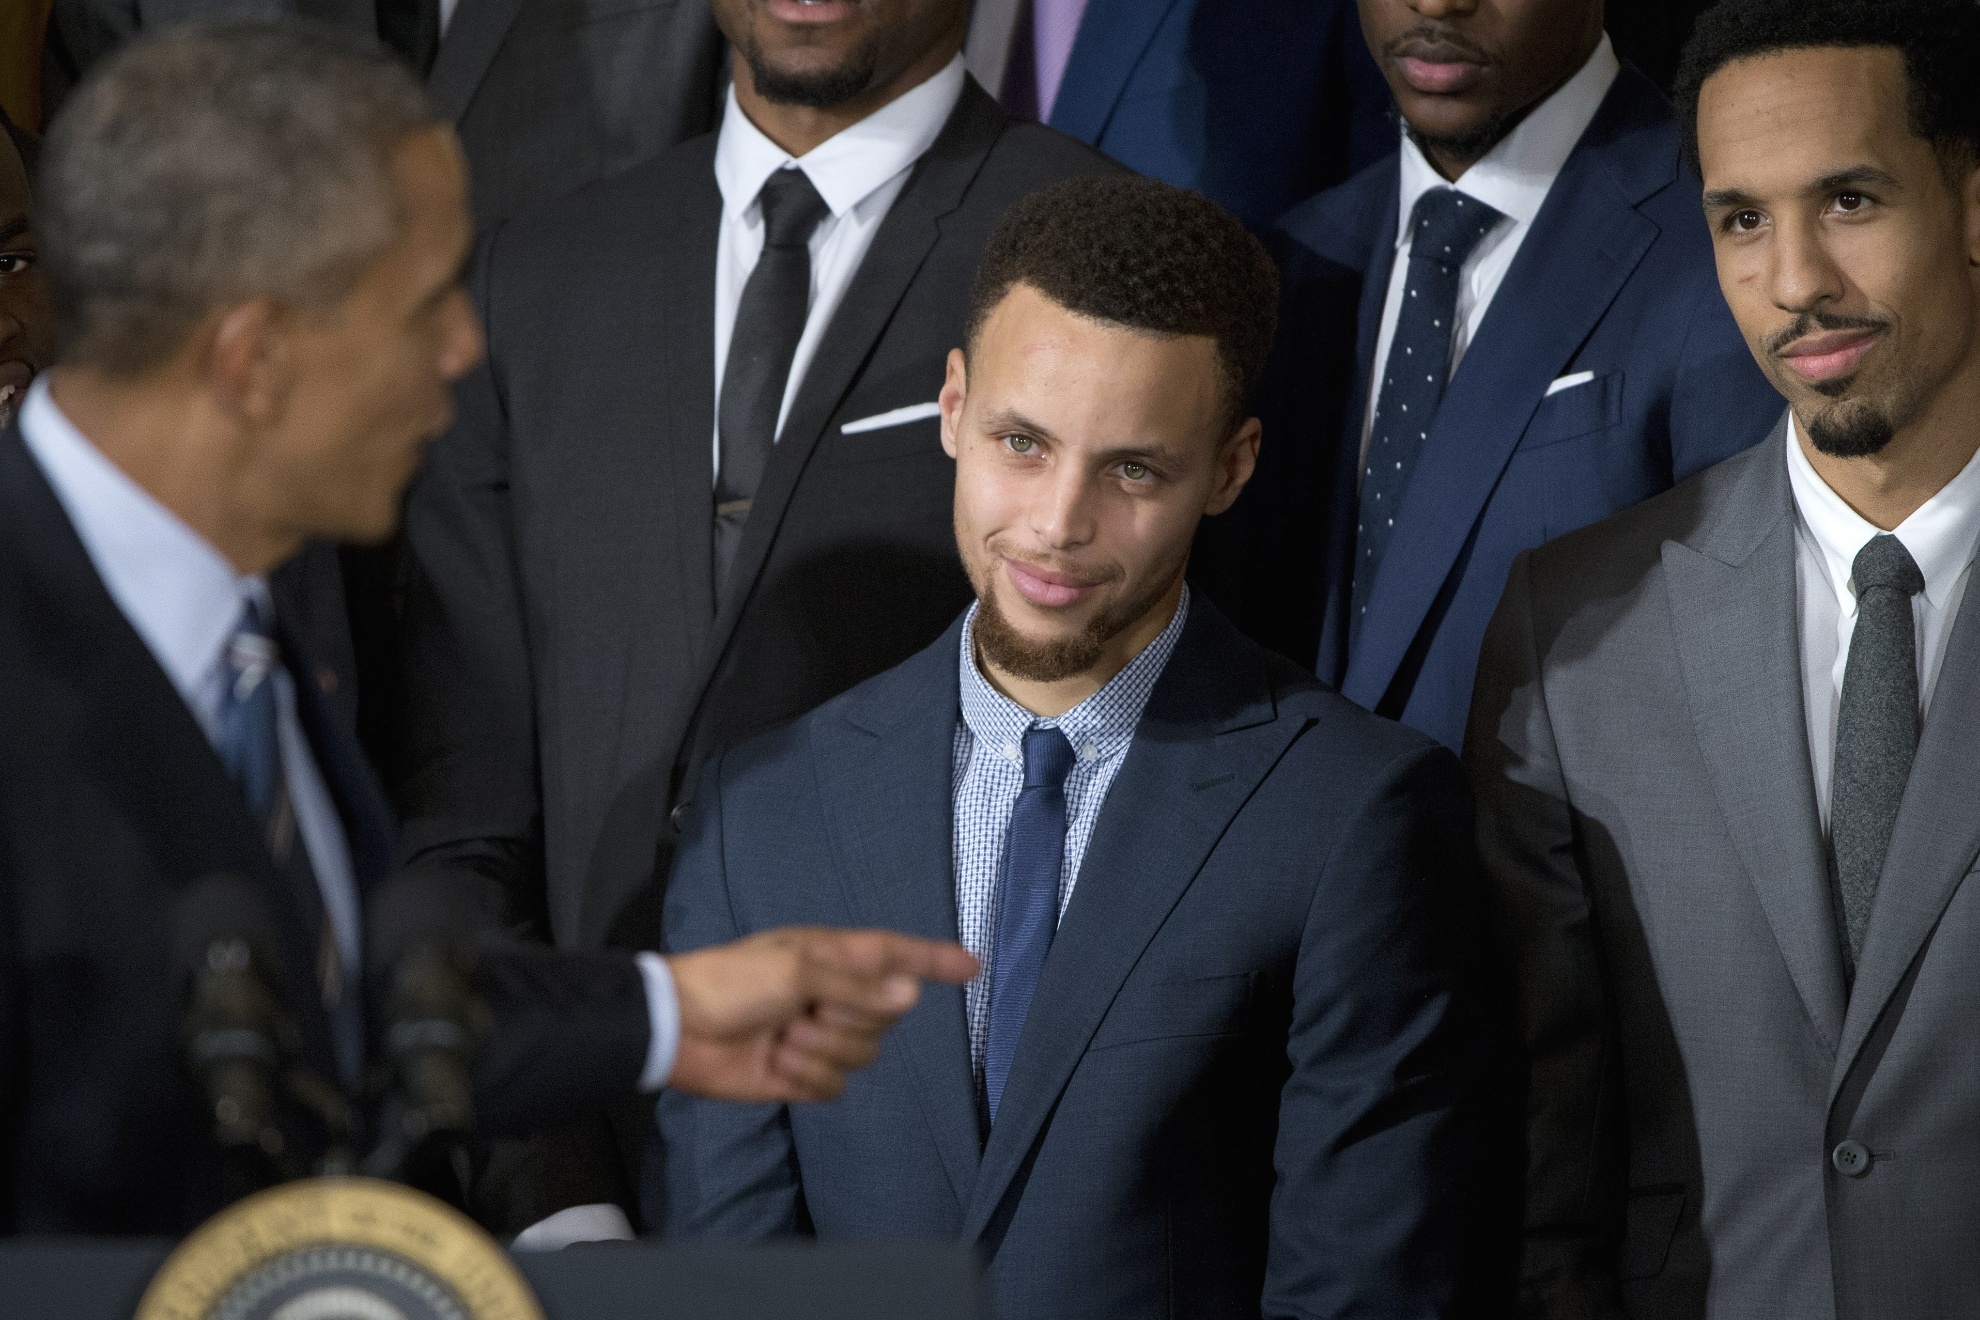 Stephen Curry looks at President Barack Obama